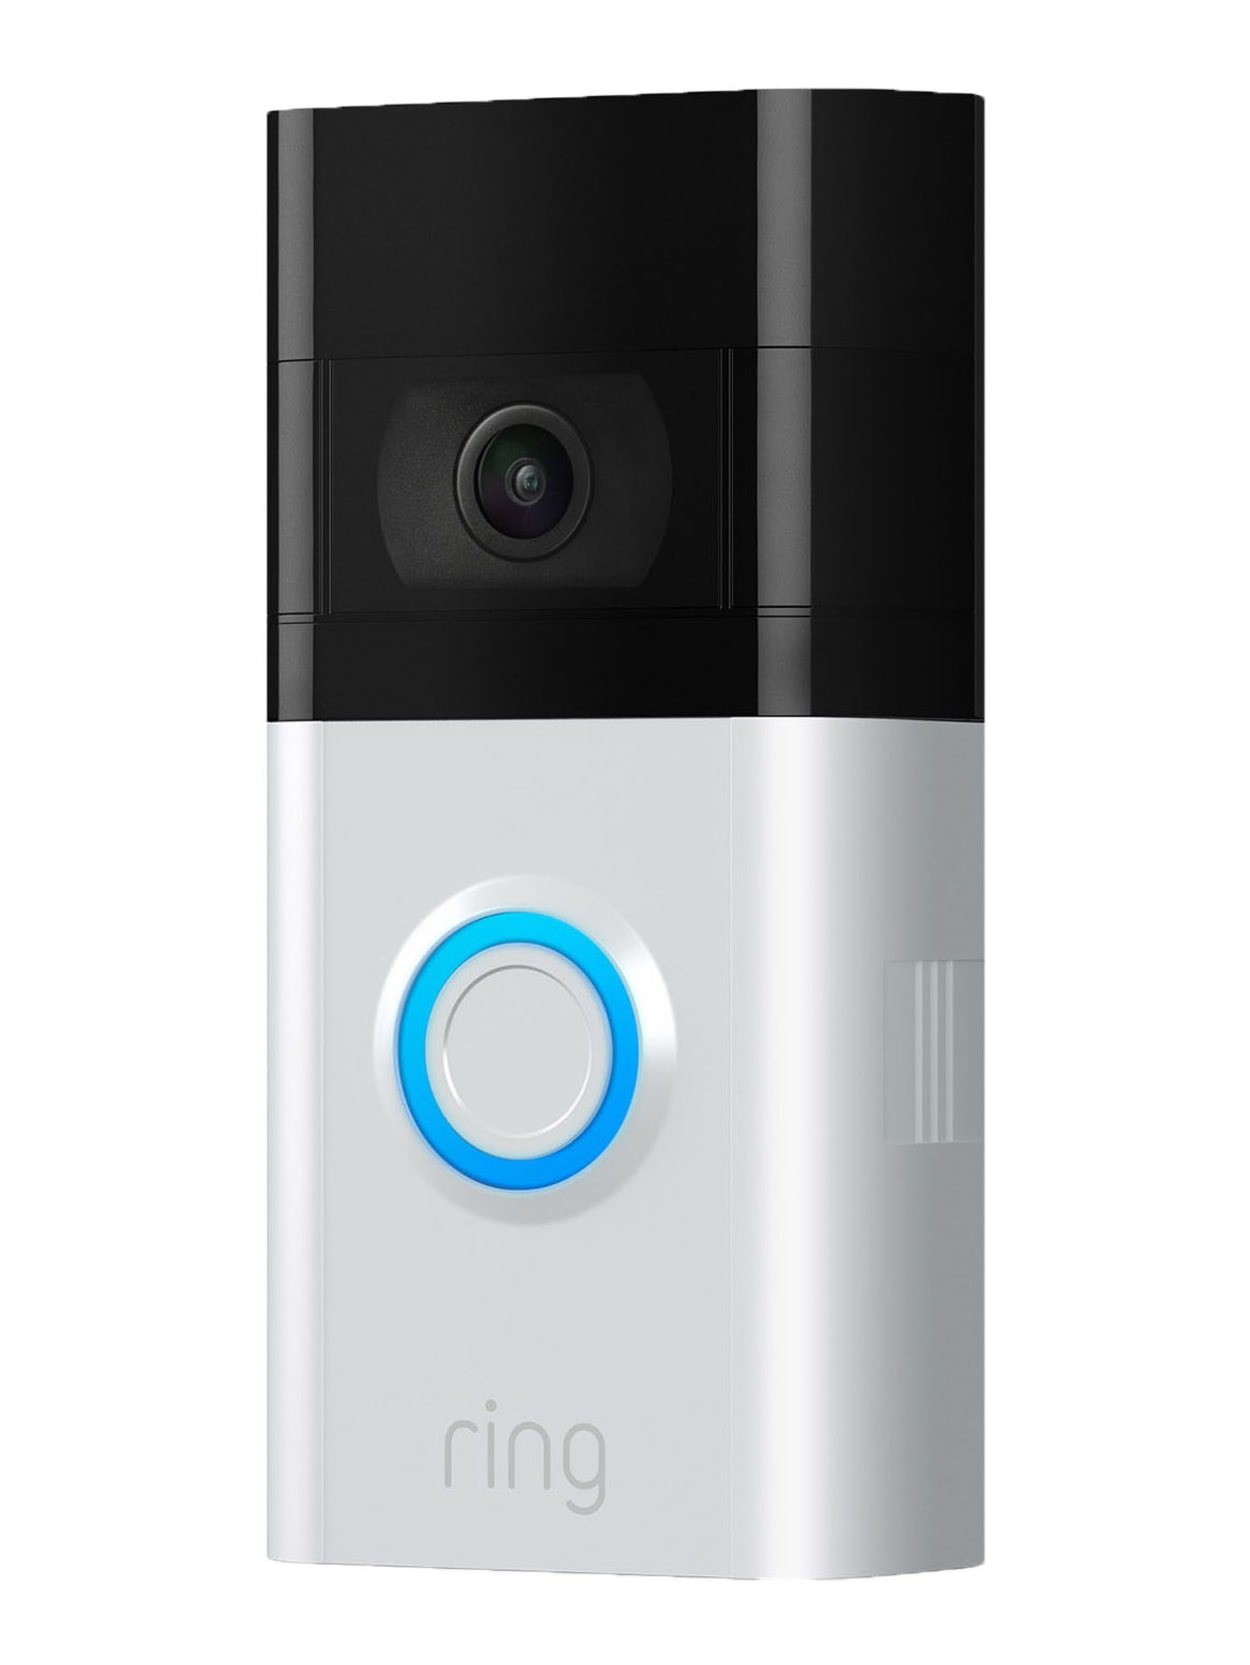 doorbell camera linked to phone